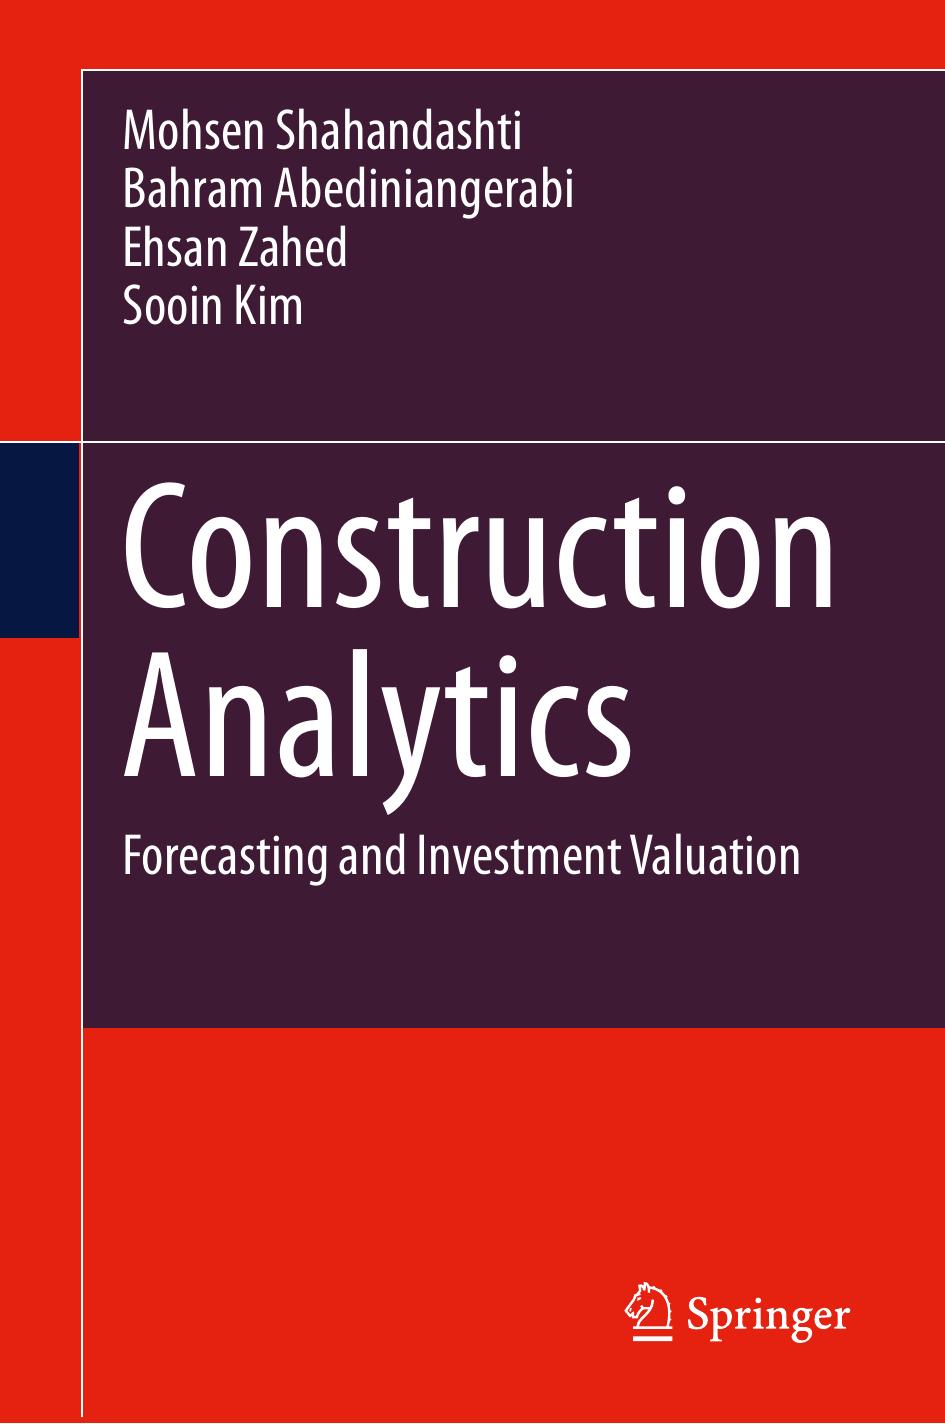 Construction Analytics: Forecasting and Investment Valuation by Mohsen Shahandashti Bahram Abediniangerabi Ehsan Zahed Sooin Kim